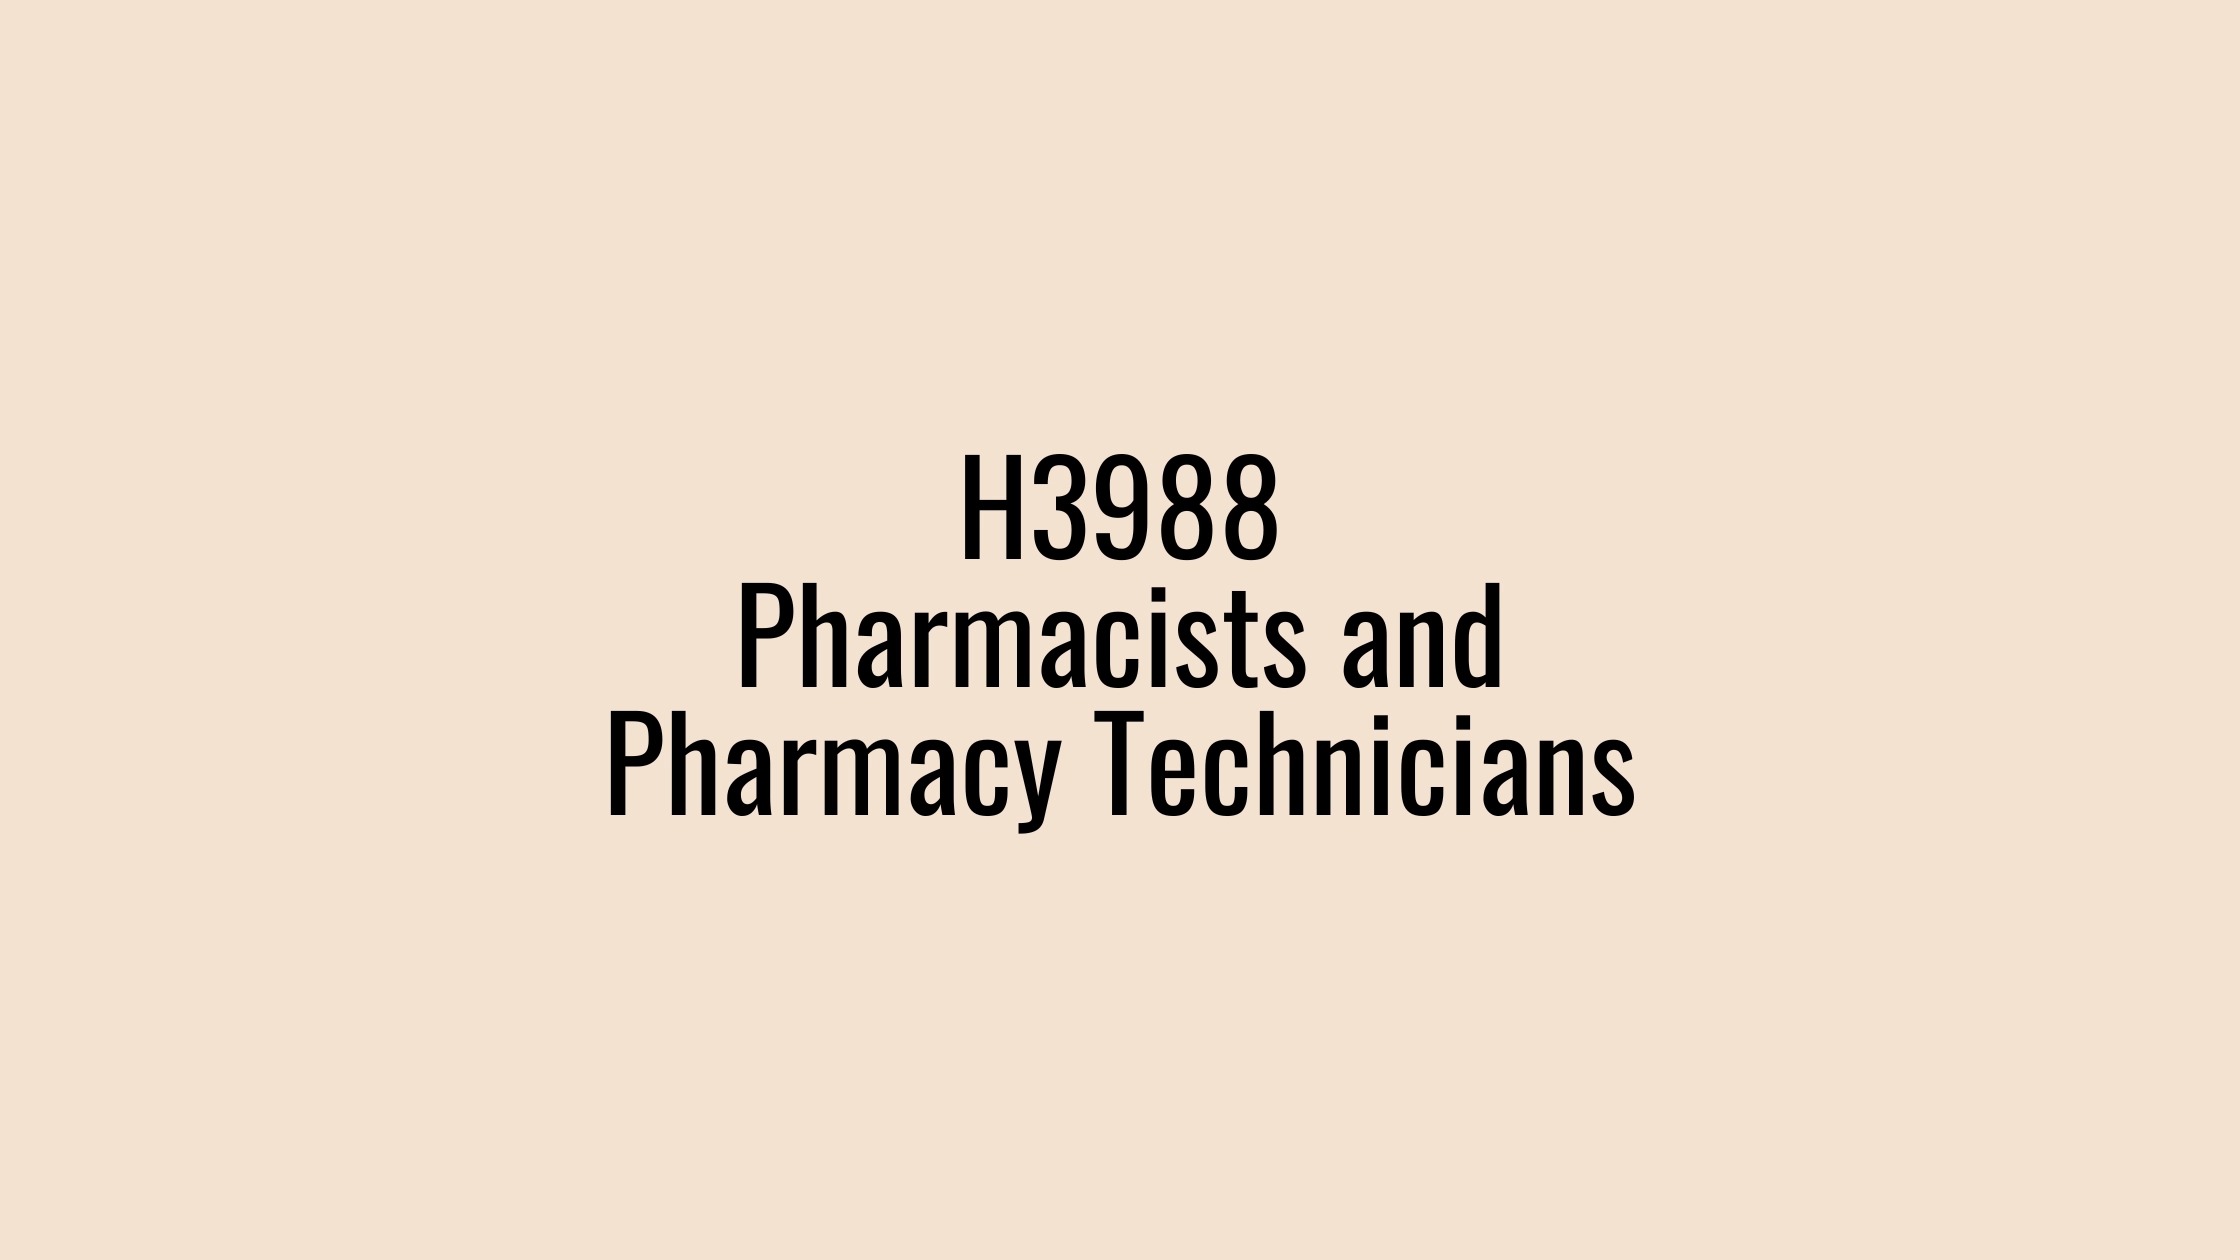 H3988: Pharmacists and Pharmacy Technicians